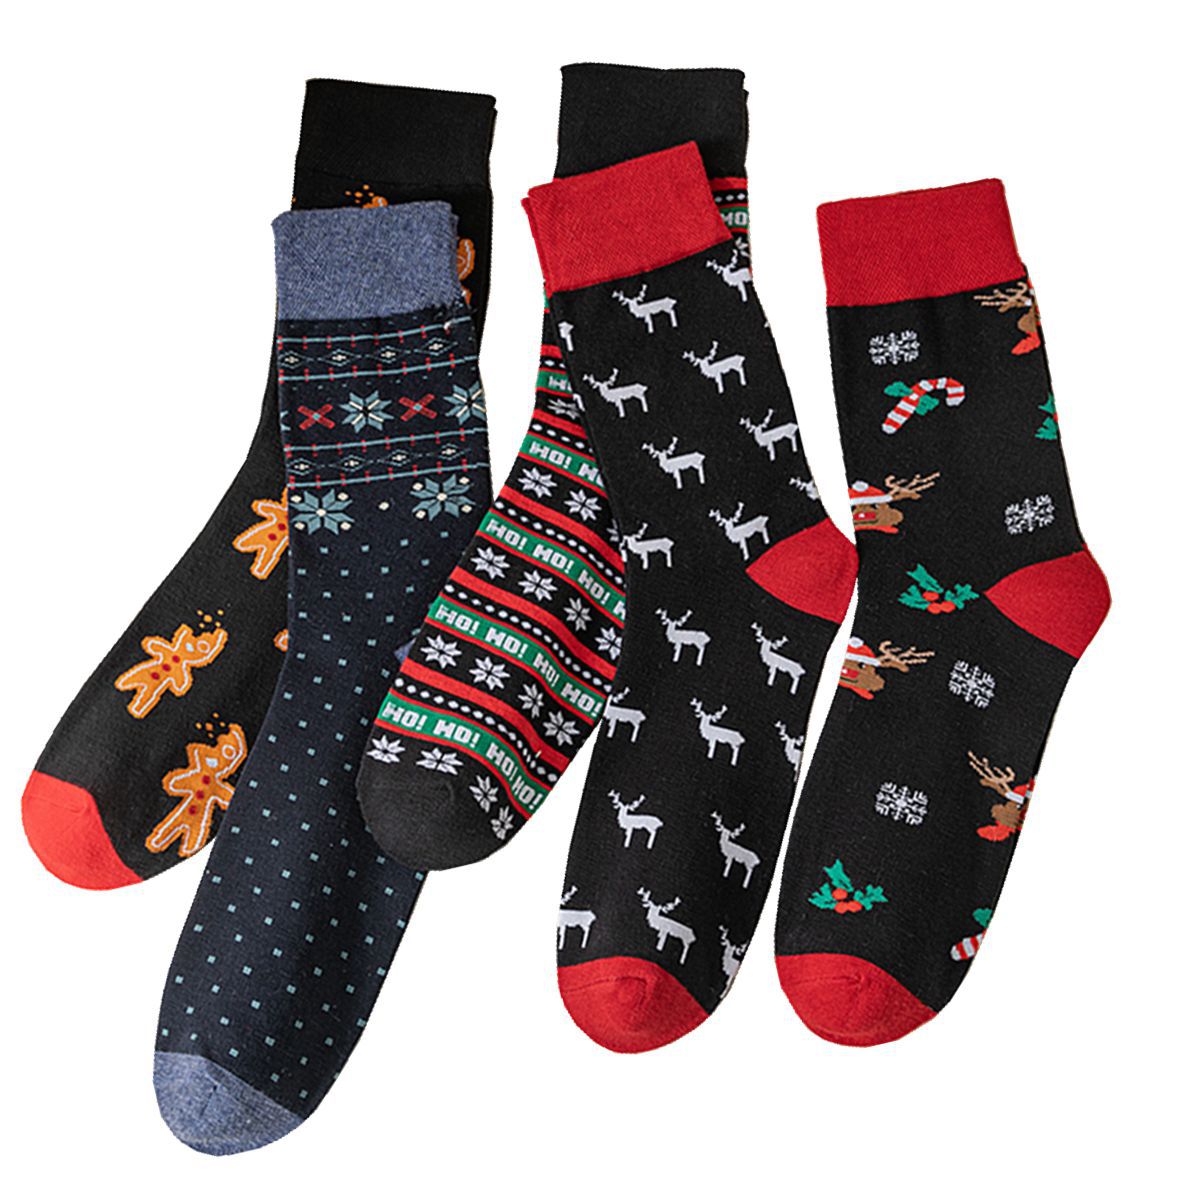 Socks Men's Autumn and Winter Mid-Calf Length Socks Combed Cotton Cartoon Pattern Gift Box Christmas Stockings Men's Socks New Year Gift